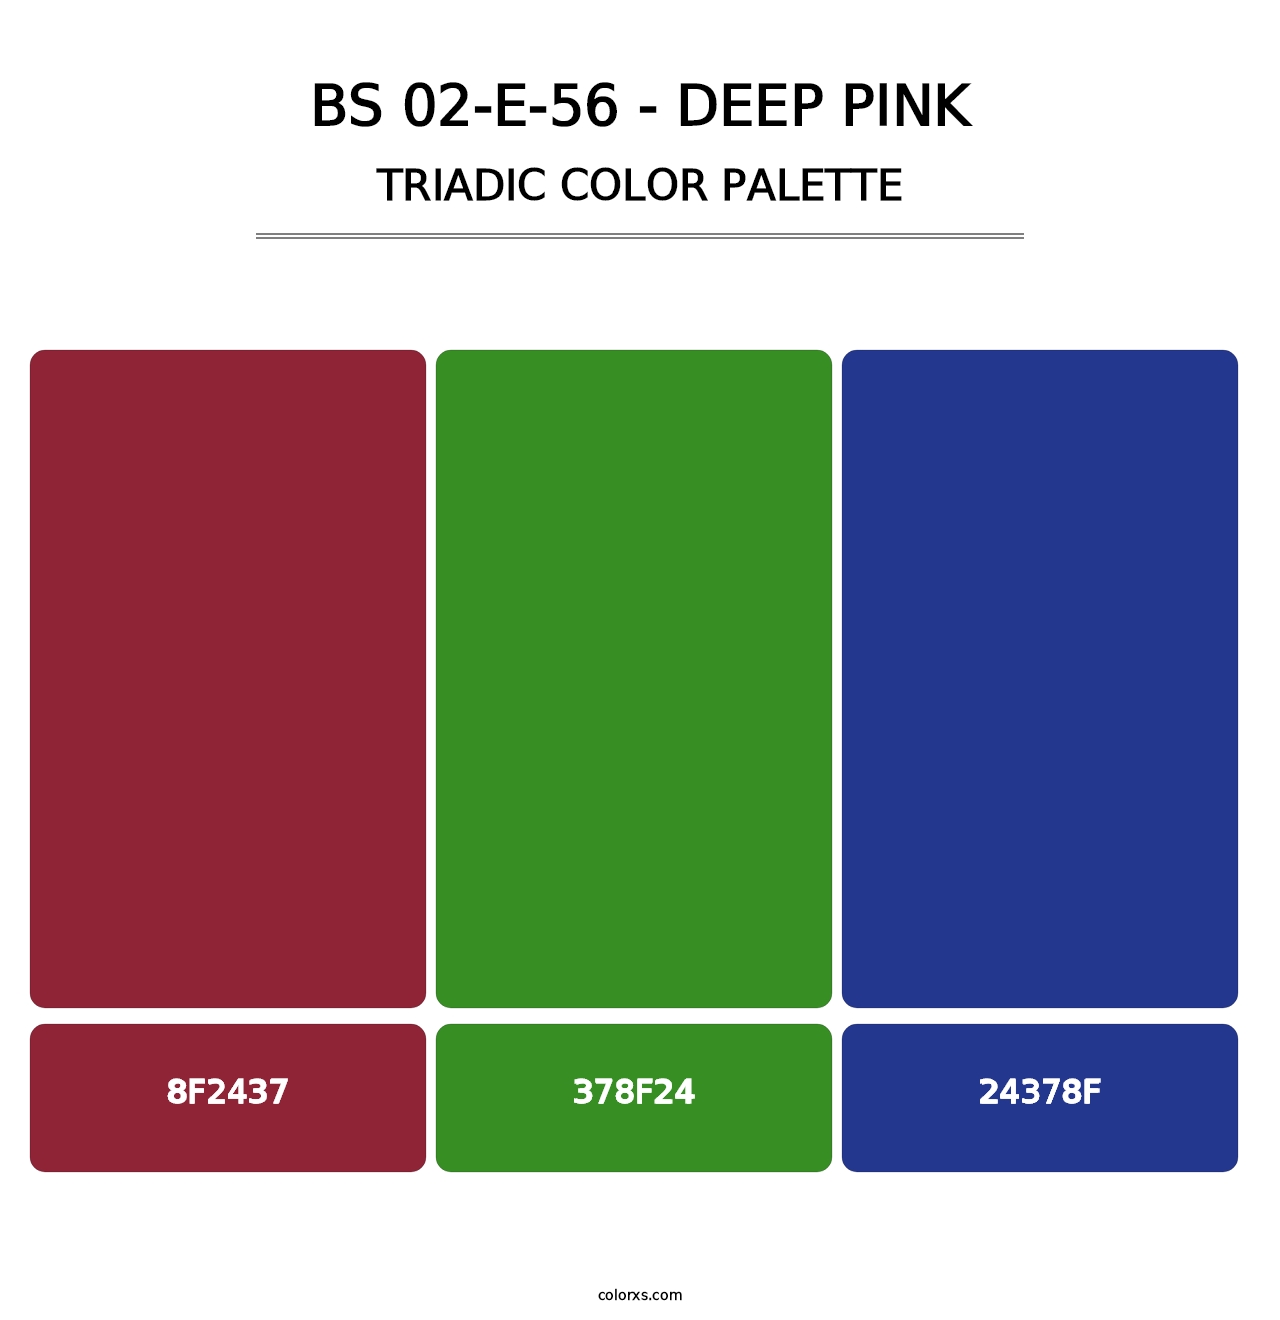 BS 02-E-56 - Deep Pink - Triadic Color Palette